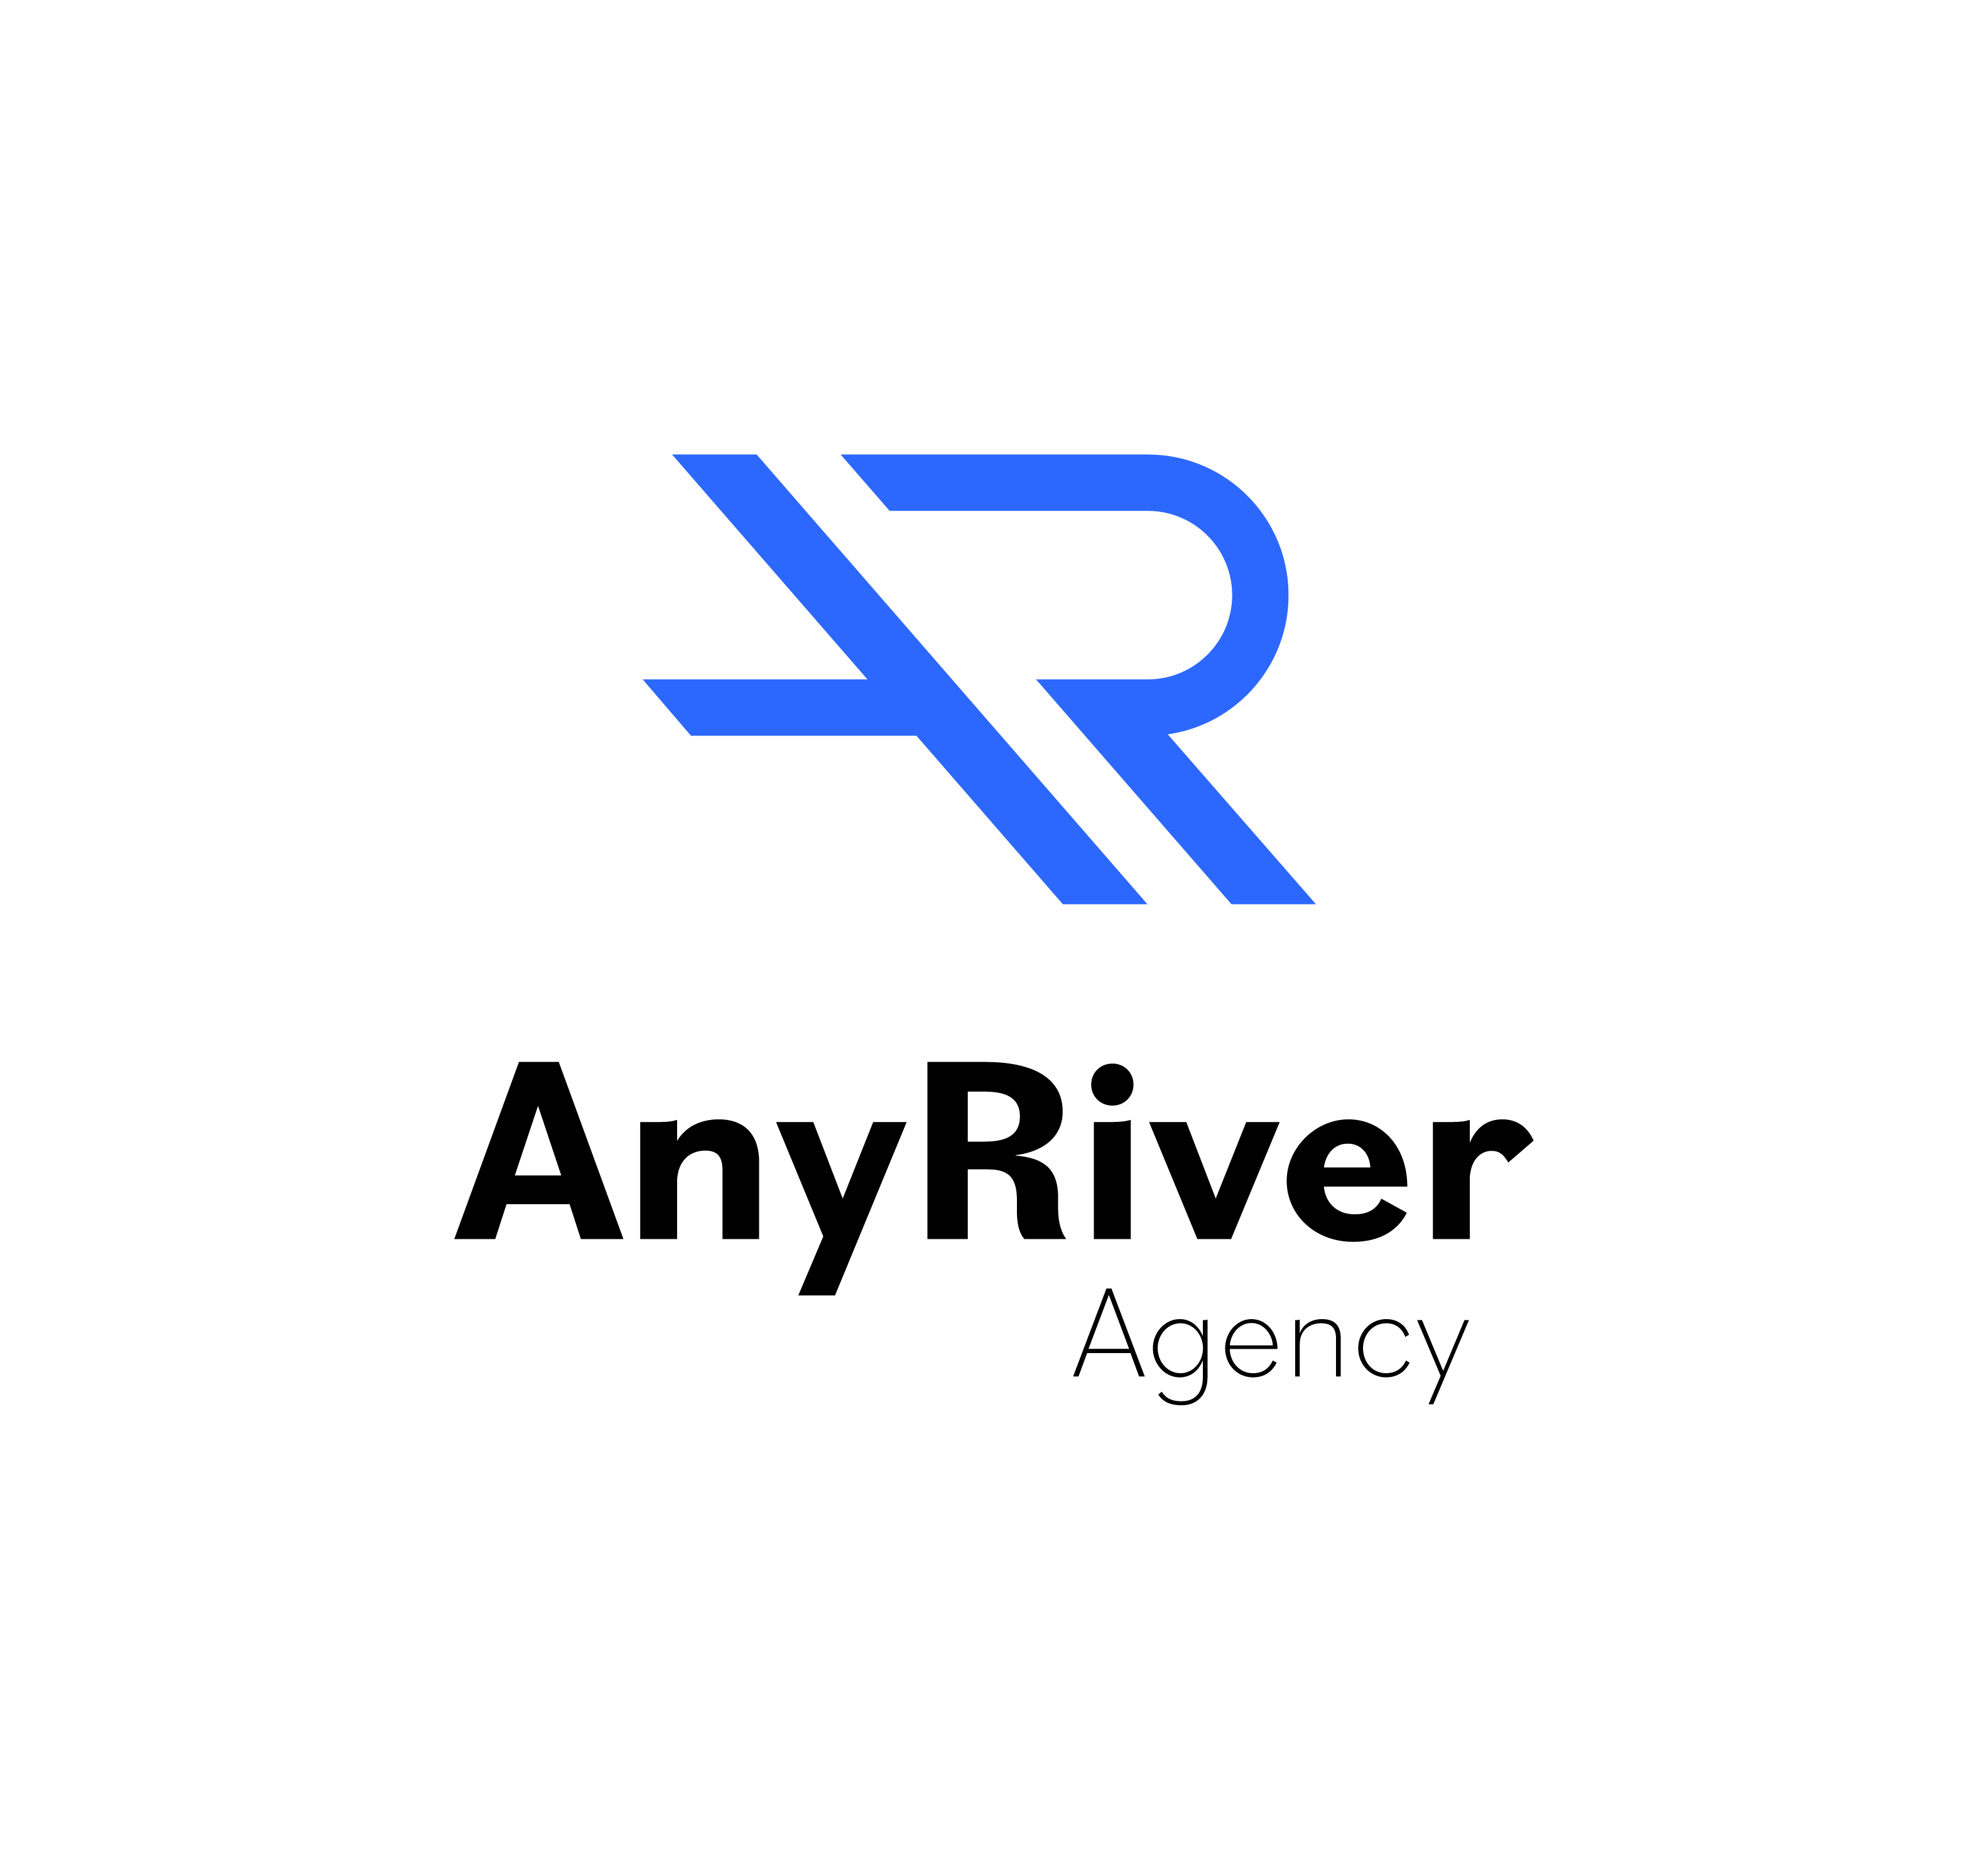 AnyRiver Agency logo